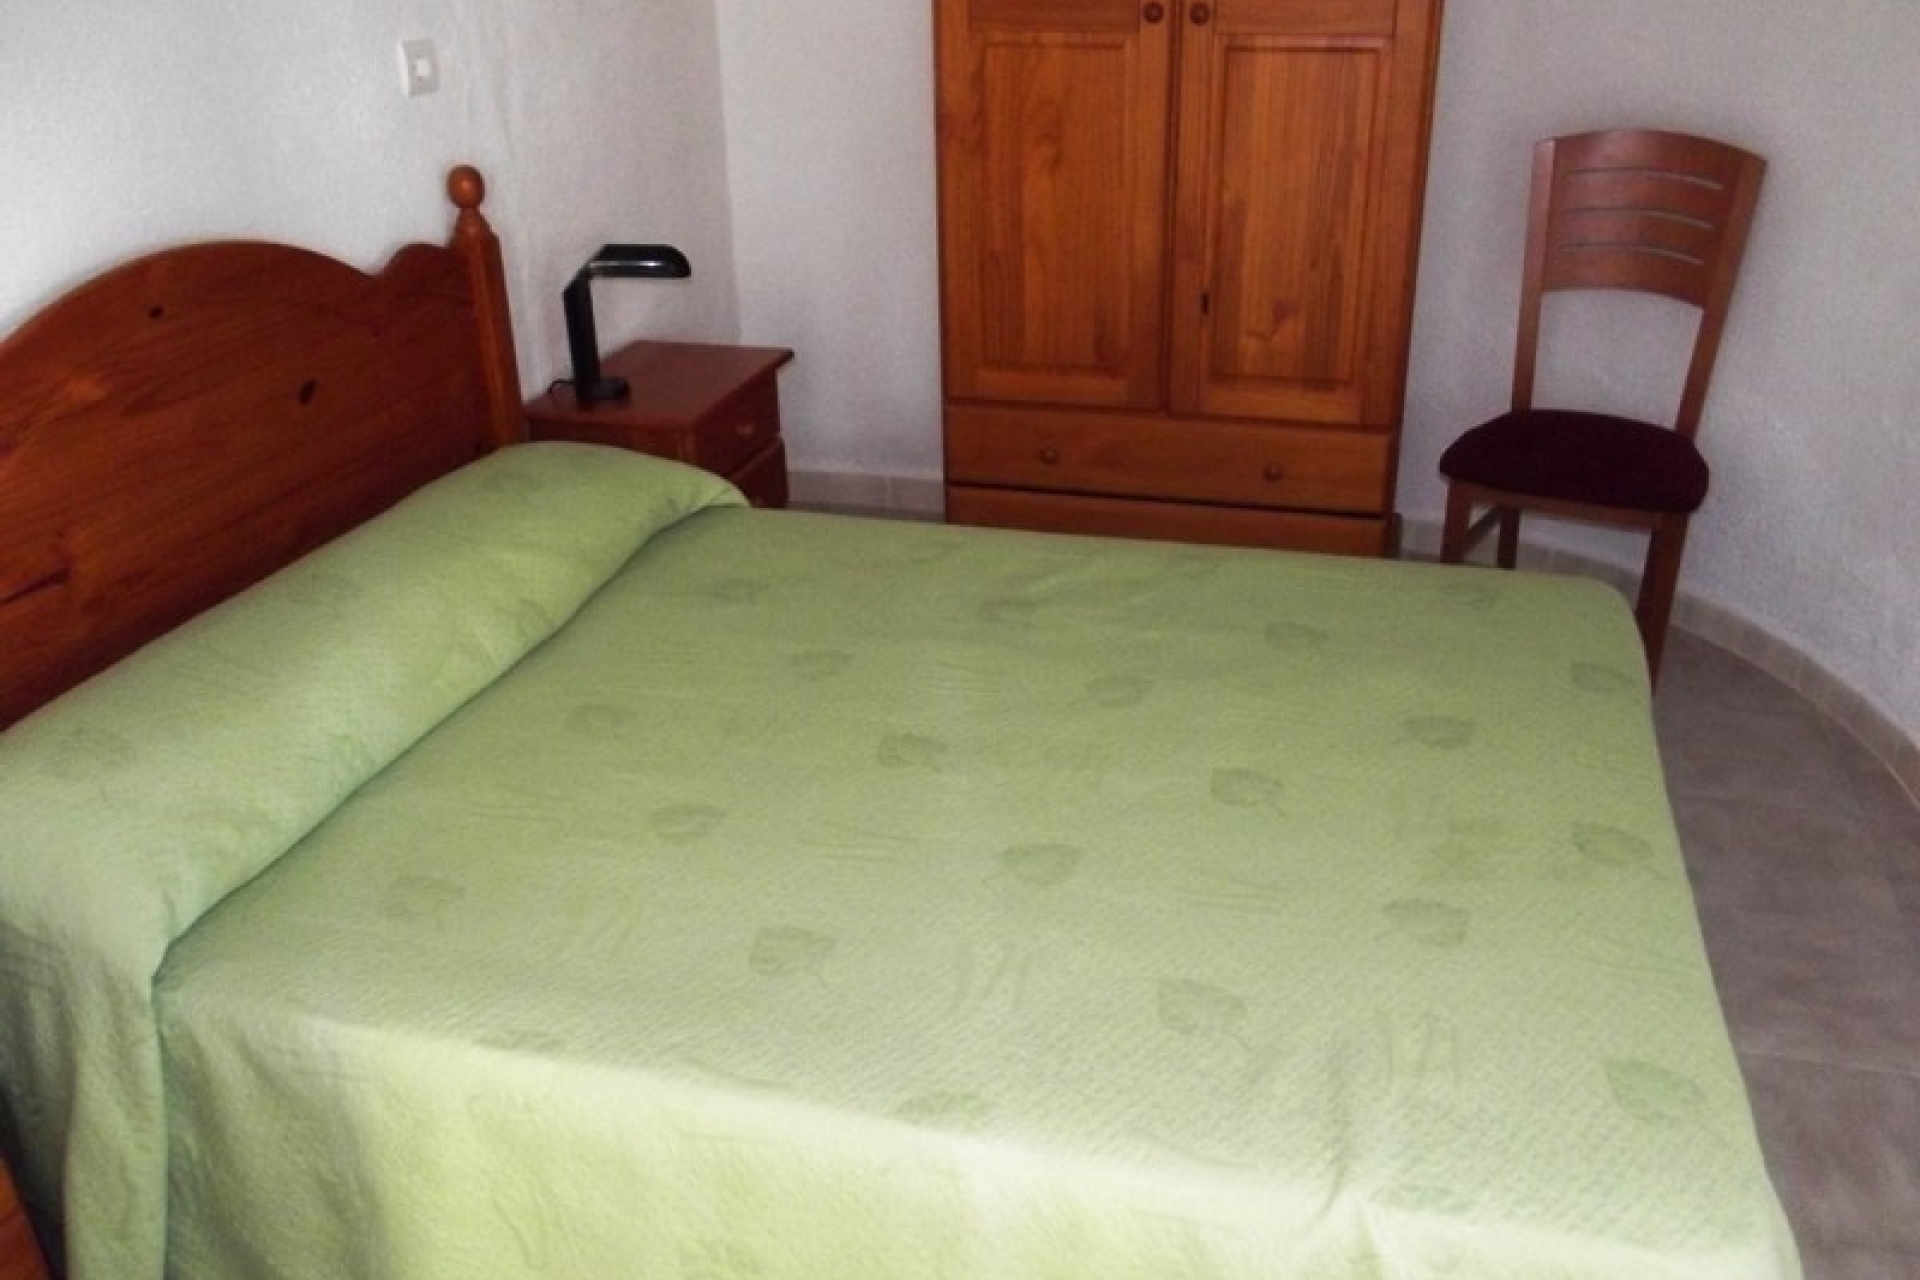 Cheap bargain villa for sale la siesta bedroom 4